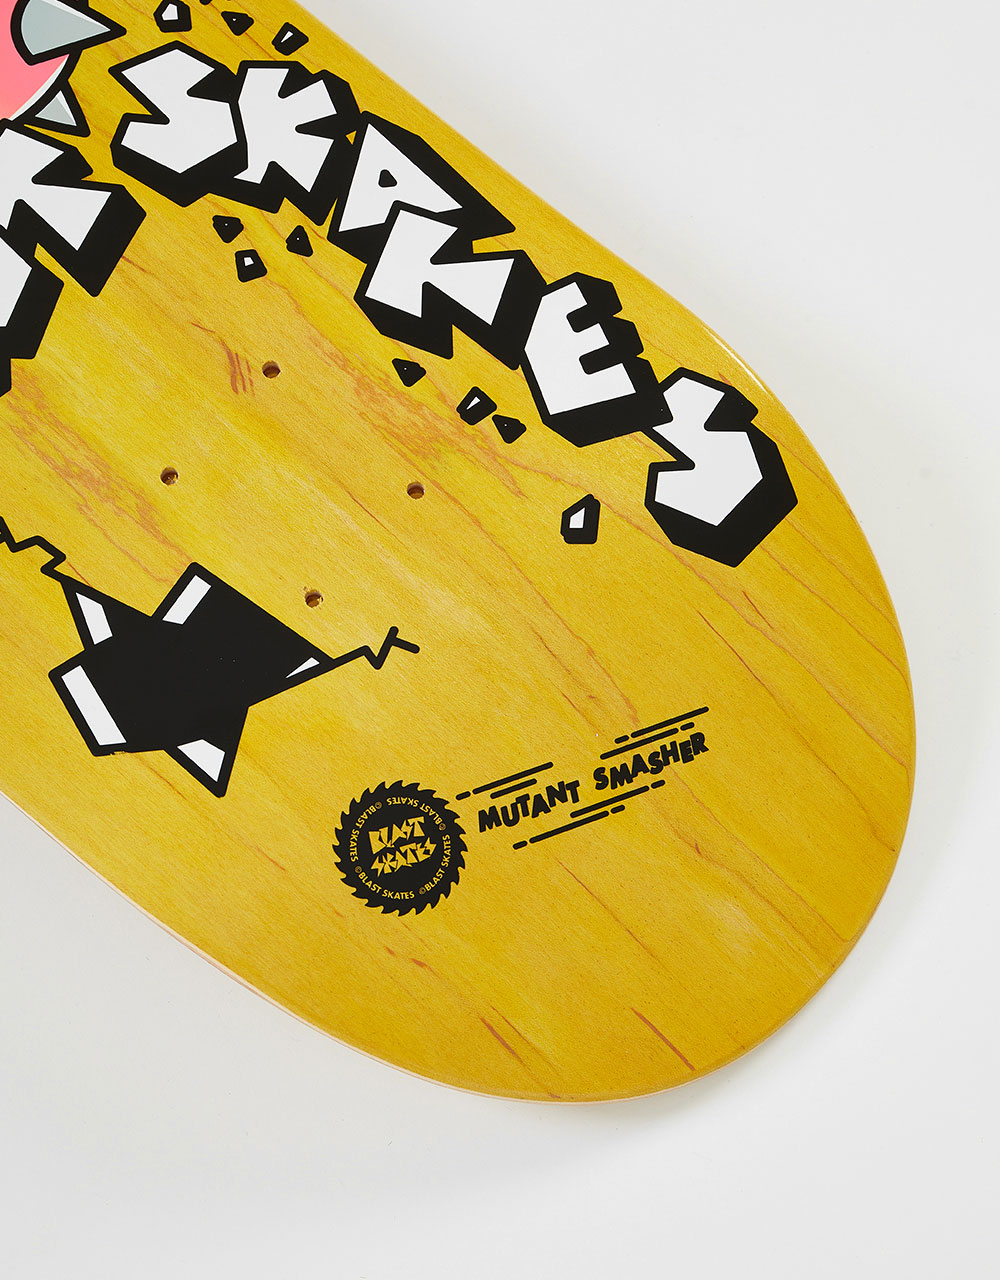 Blast Skates Mutant Smasher!!! Skateboard Deck - 9"